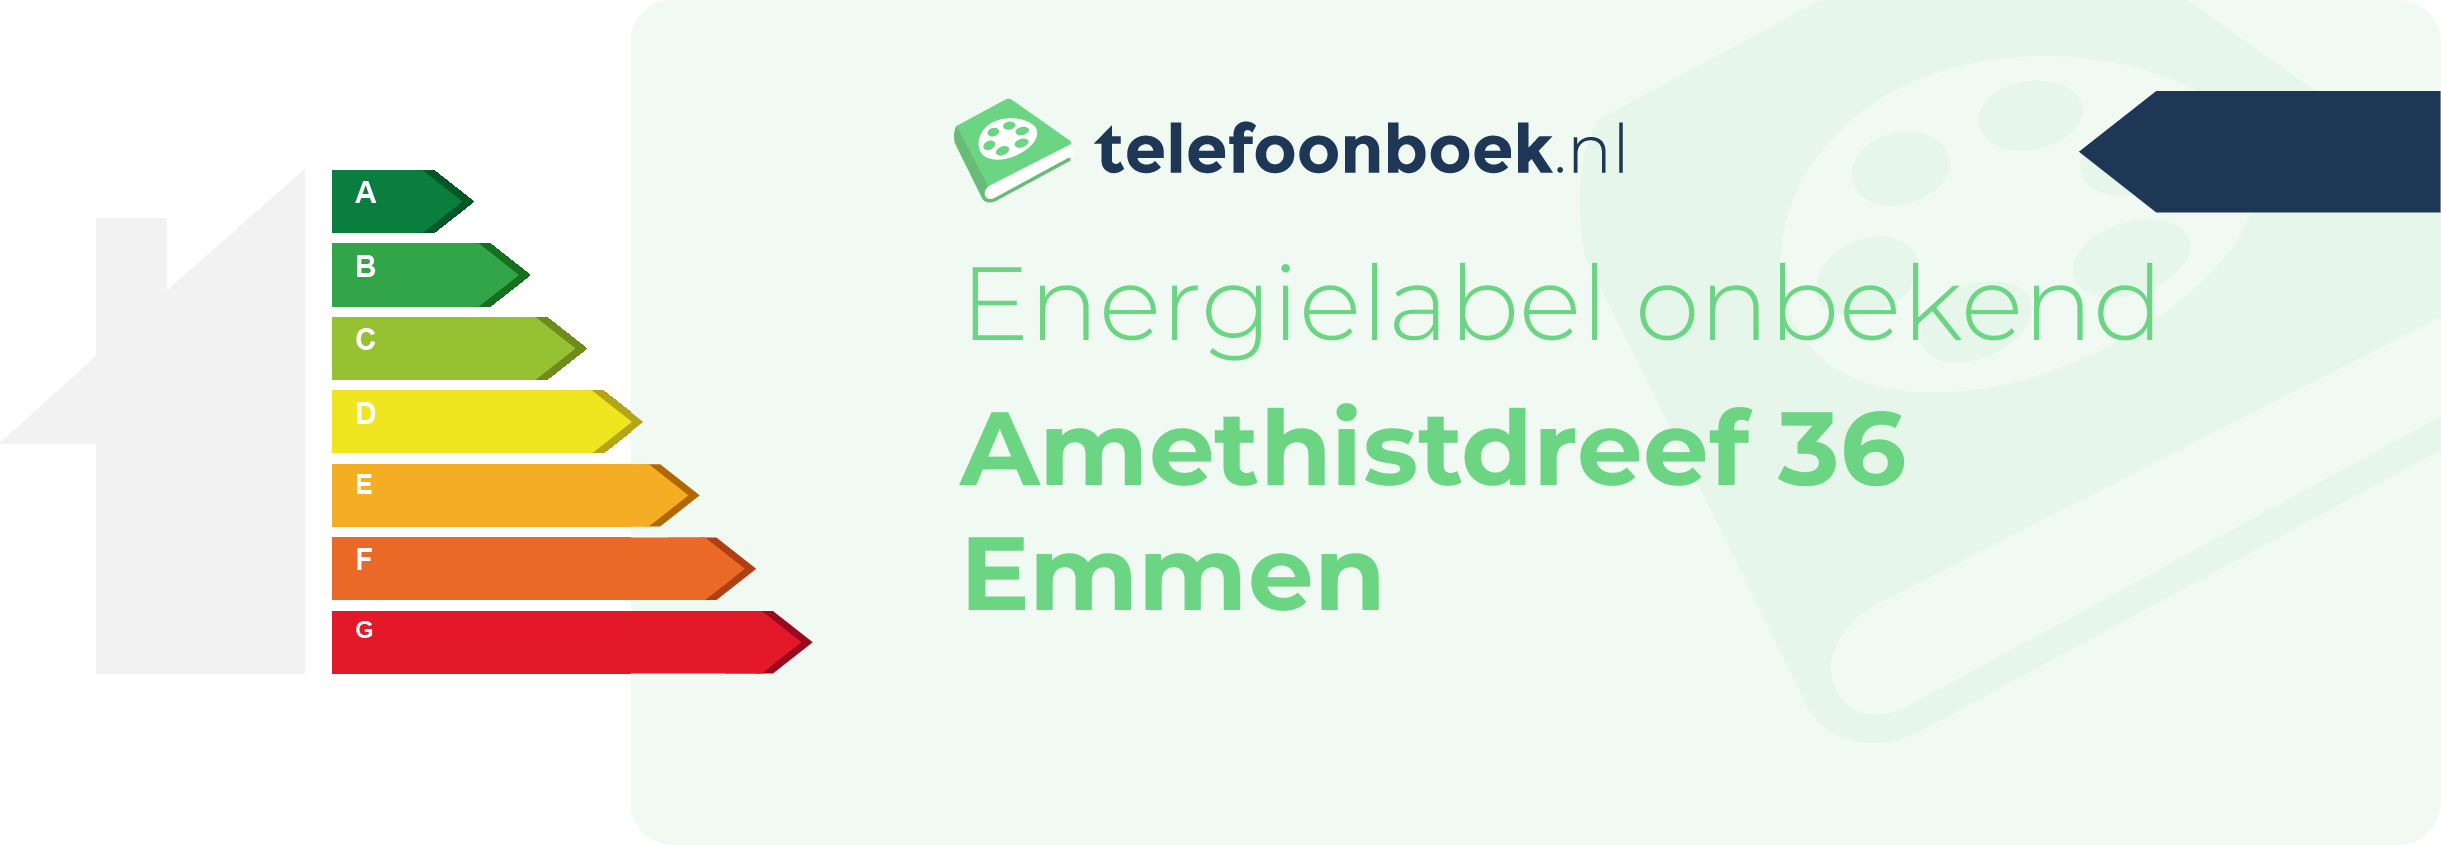 Energielabel Amethistdreef 36 Emmen